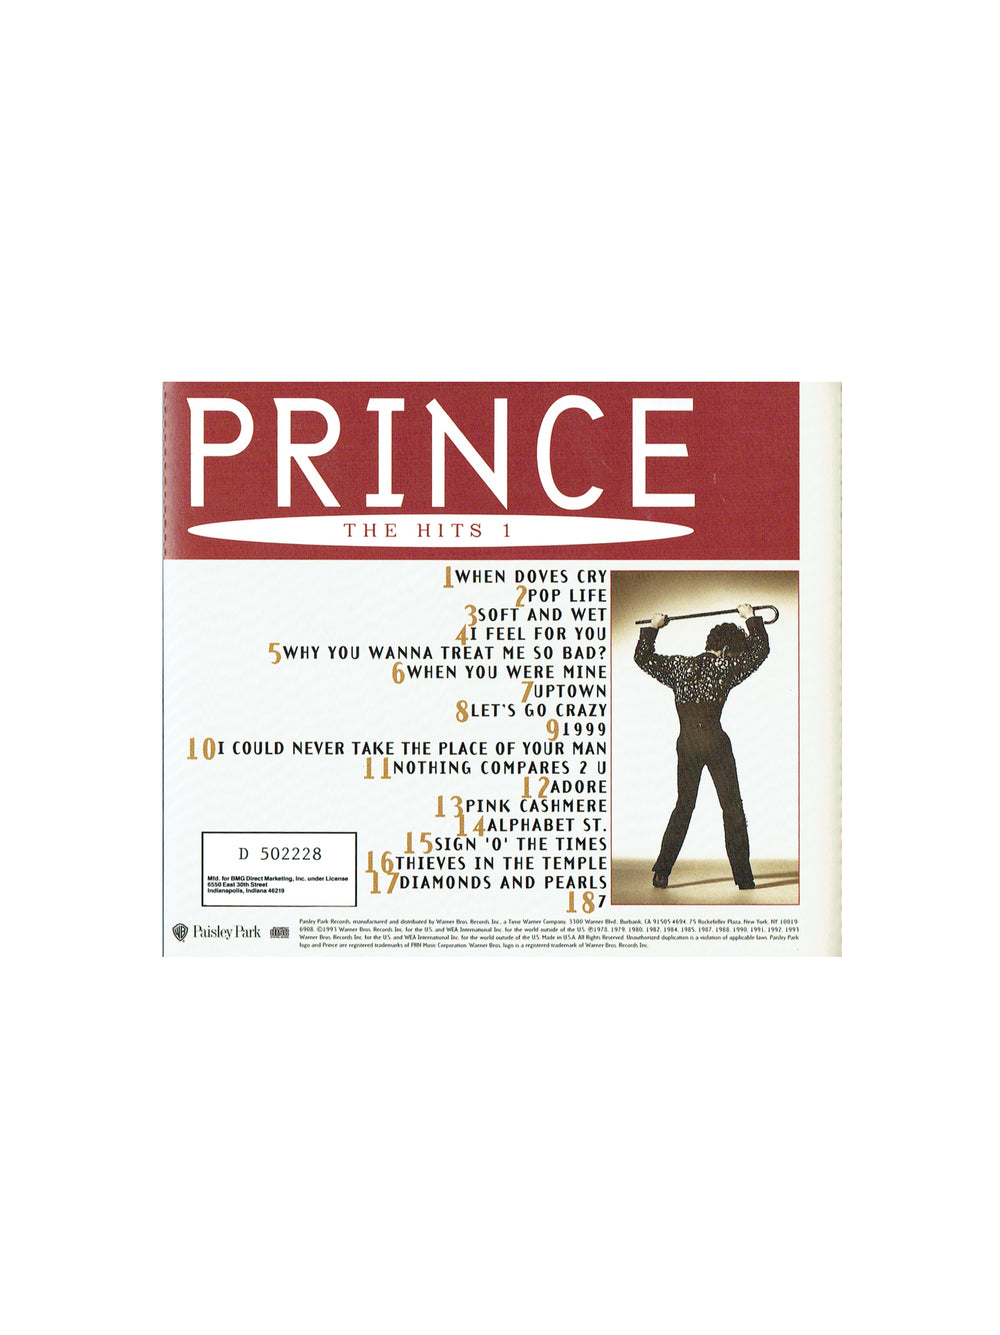 Prince – The Hits 1 CD Album US Preloved: 1993